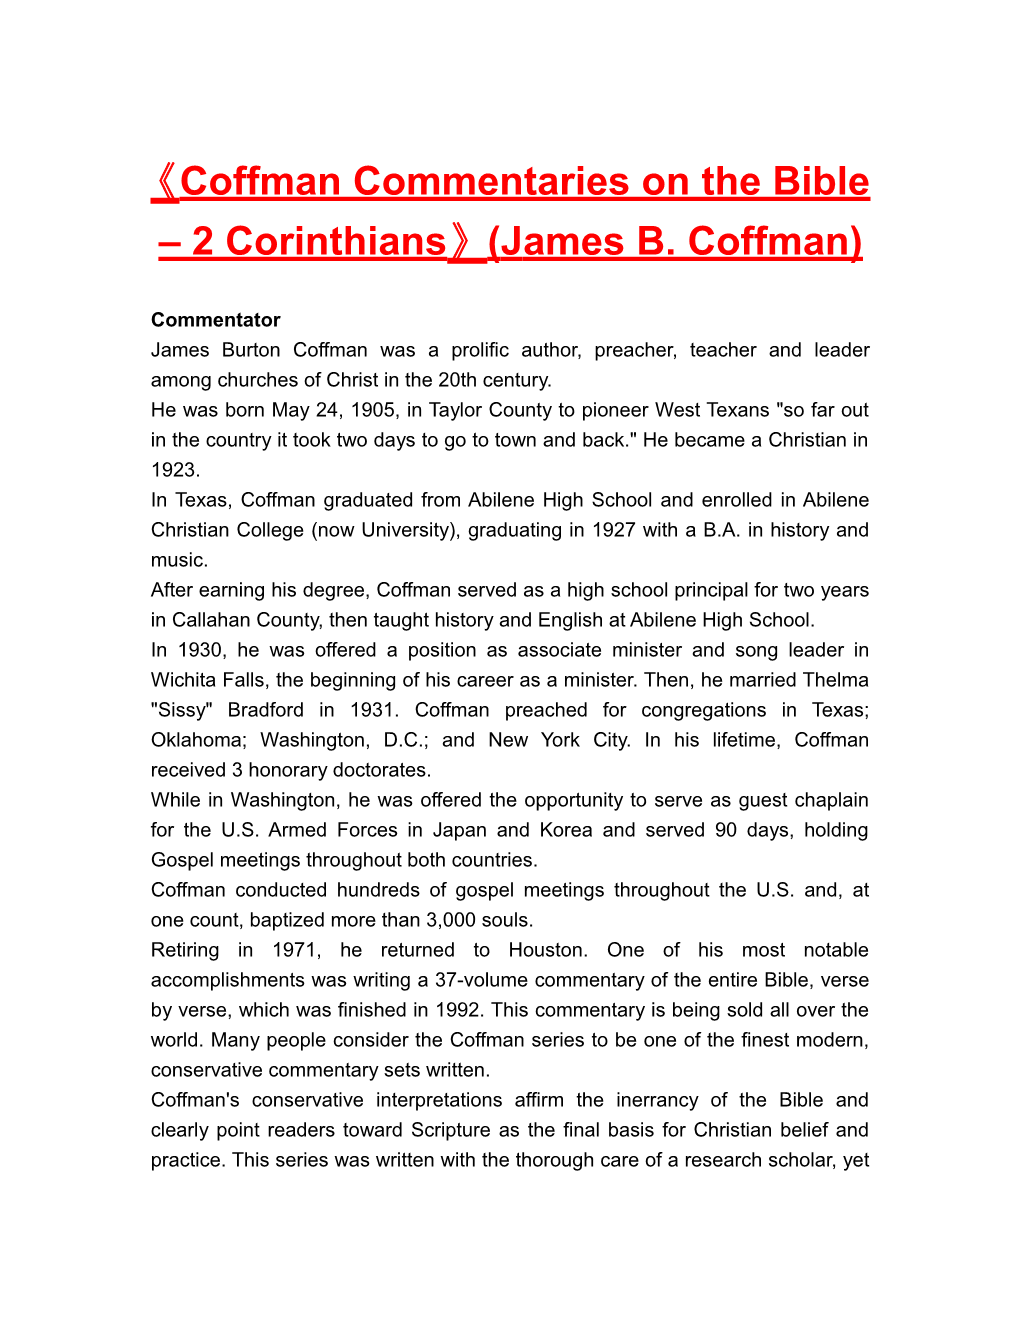 Coffman Commentaries on the Bible 2 Corinthians (James B. Coffman)